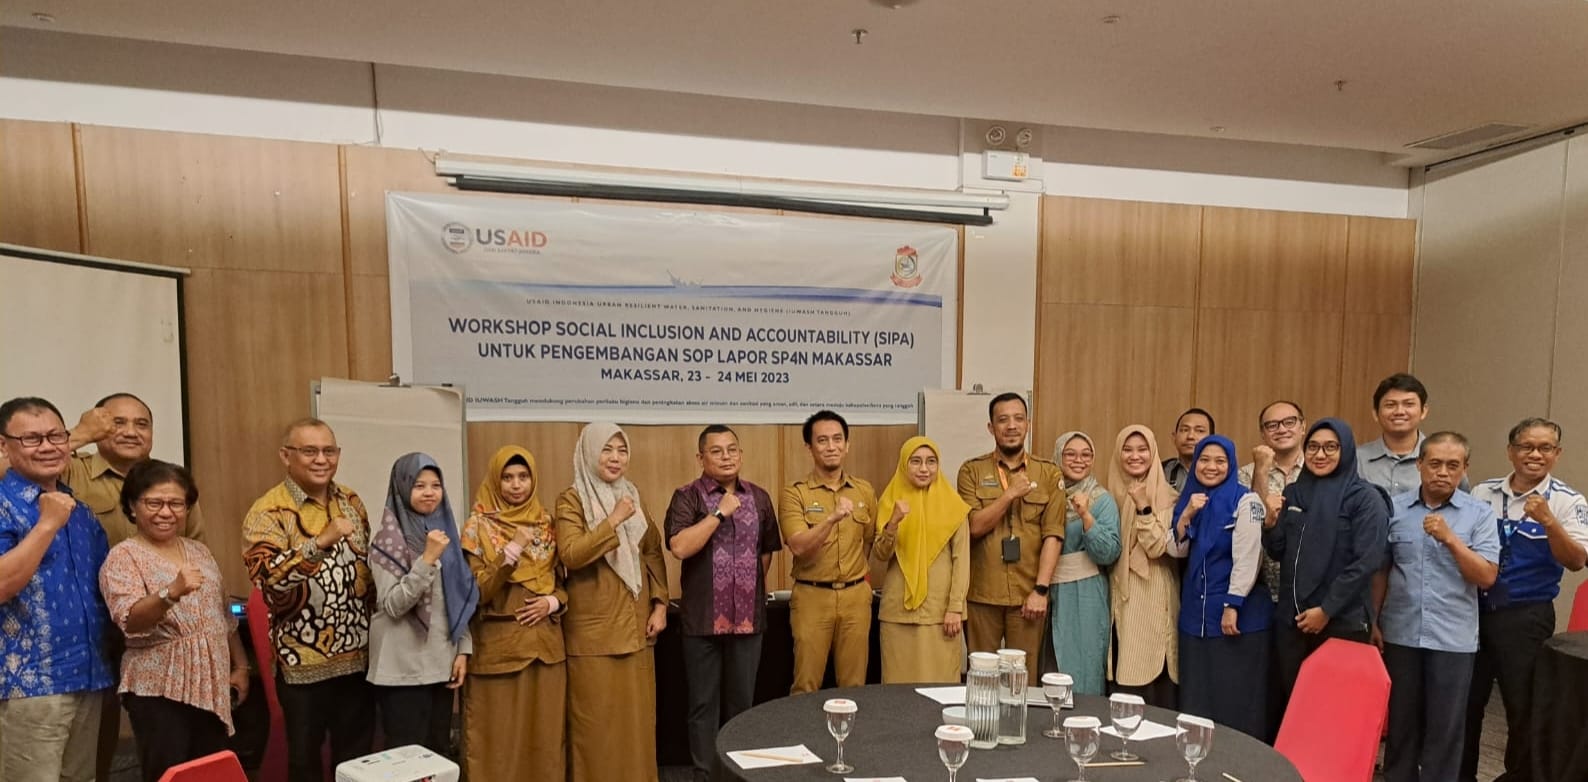 Pemkot Makassar - USAID IUWASTH Tangguh Gelar Workshop SIPA Pengembangan SOP Lapor SP4N Kota Makassar